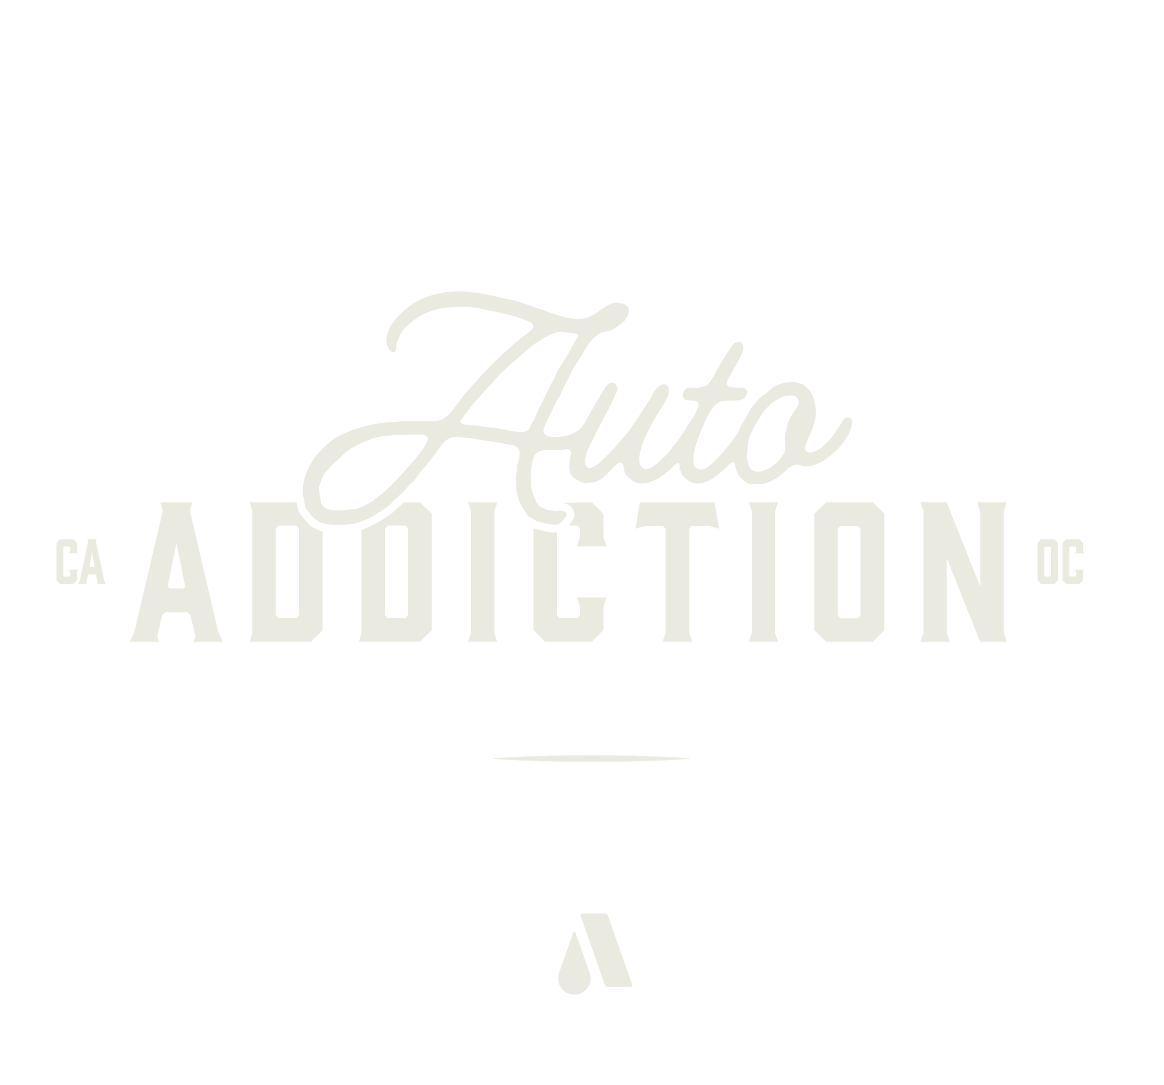 AutoAddiction